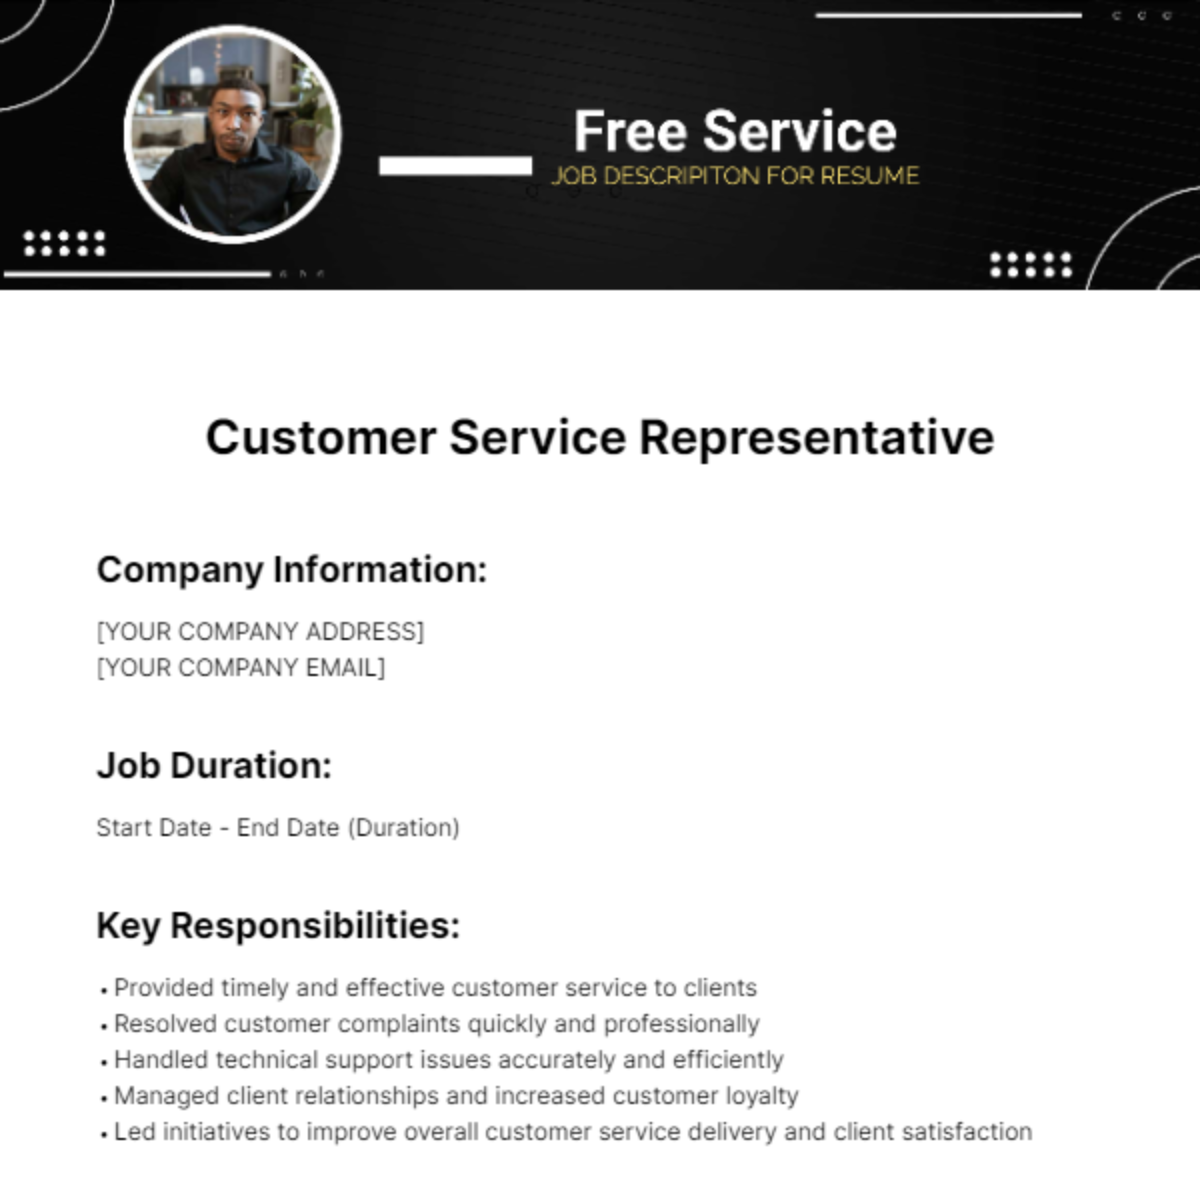 Service Job Description for Resume Template